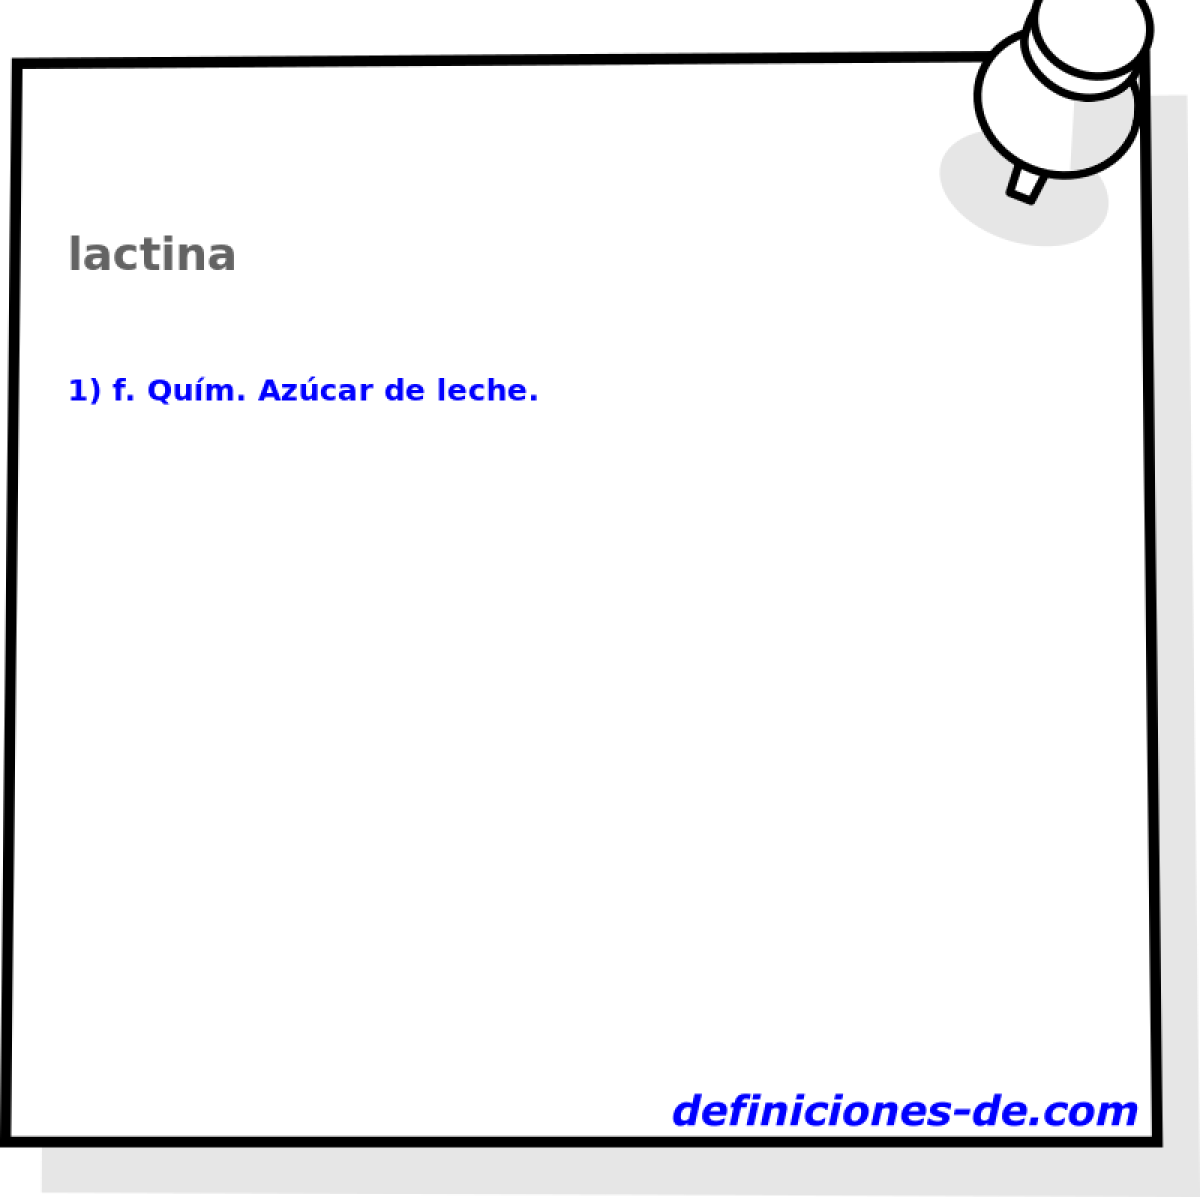 lactina 